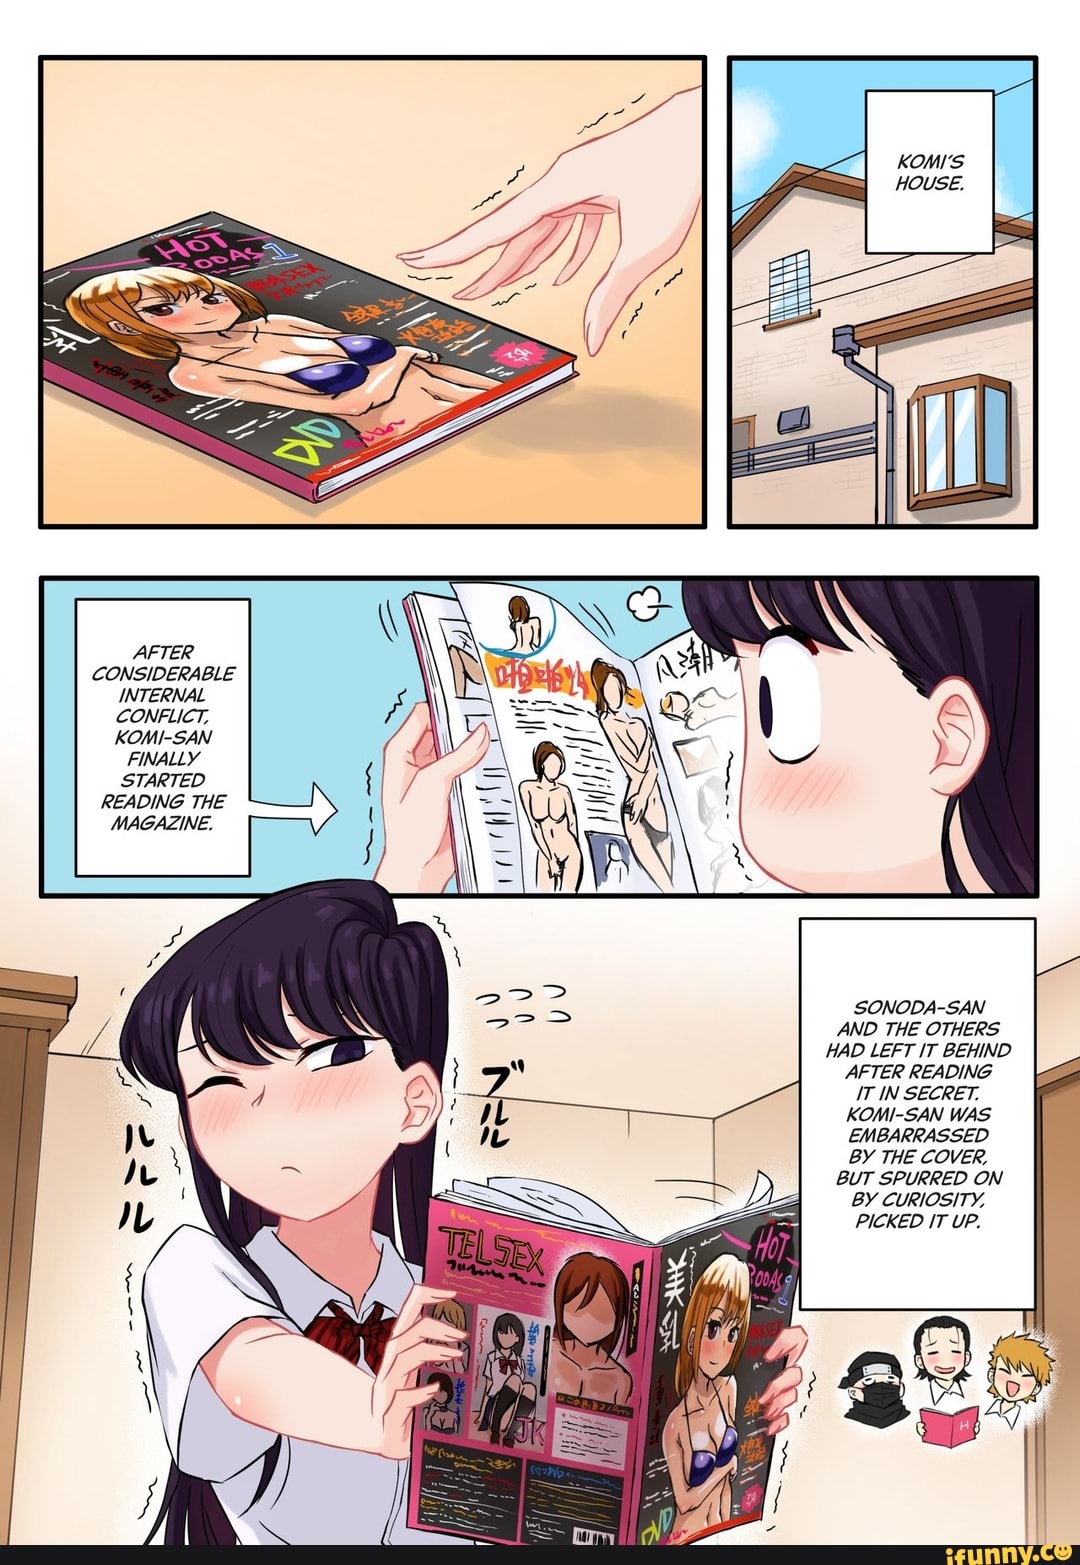 Self-Insert Rights Advocate — Komi-San redraw of this manga panel!